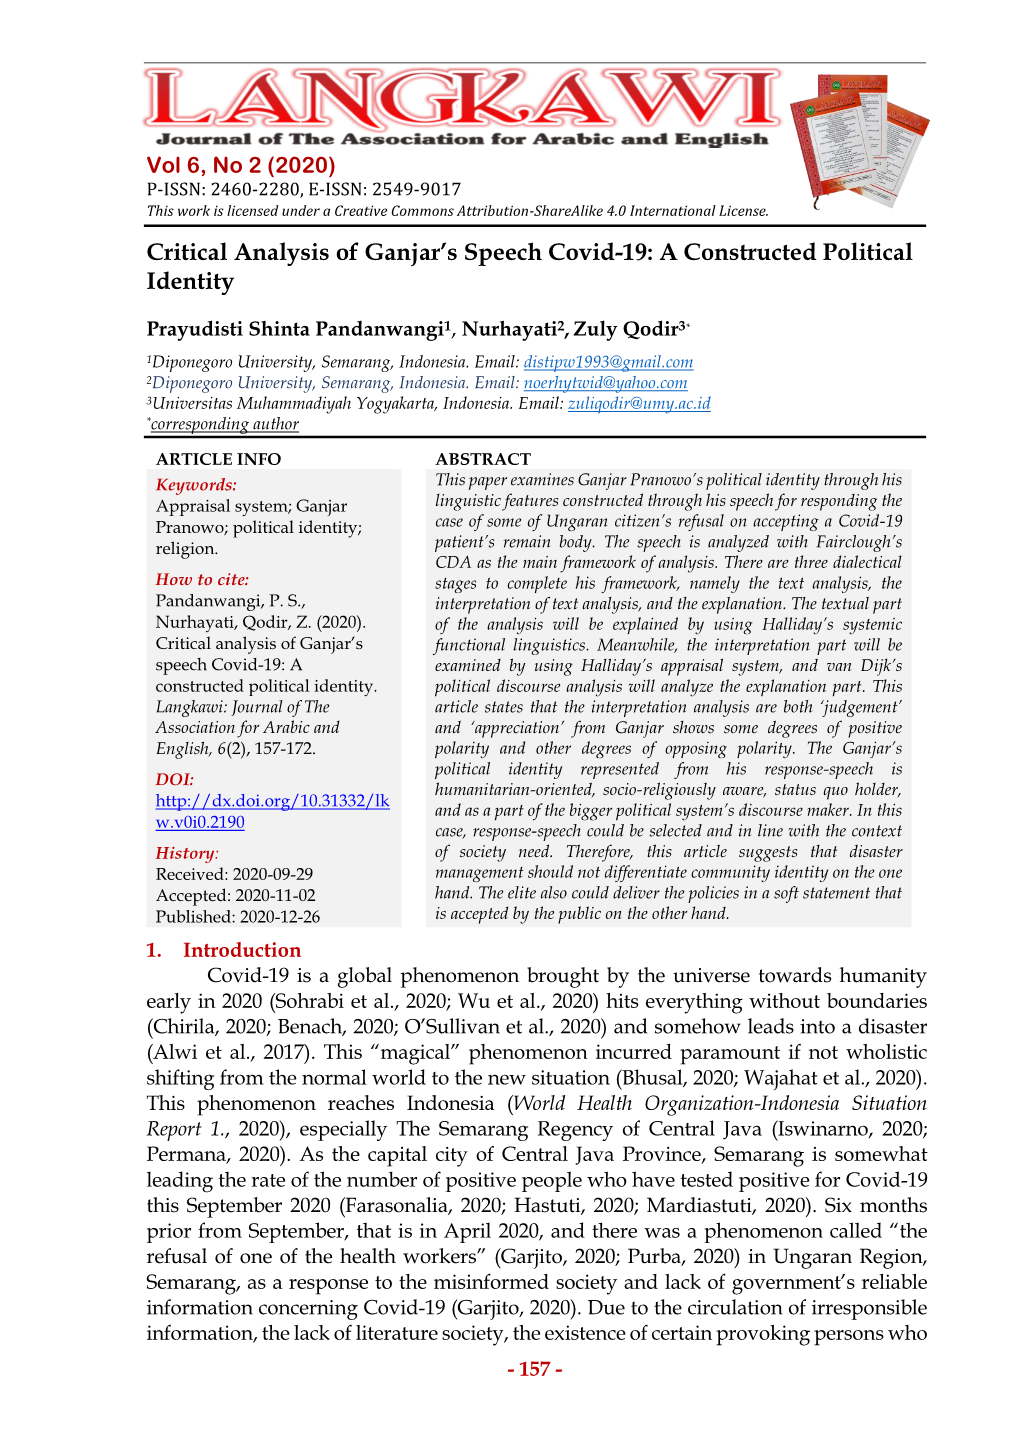 Critical Analysis of Ganjar's Speech Covid-19: a Constructed Political